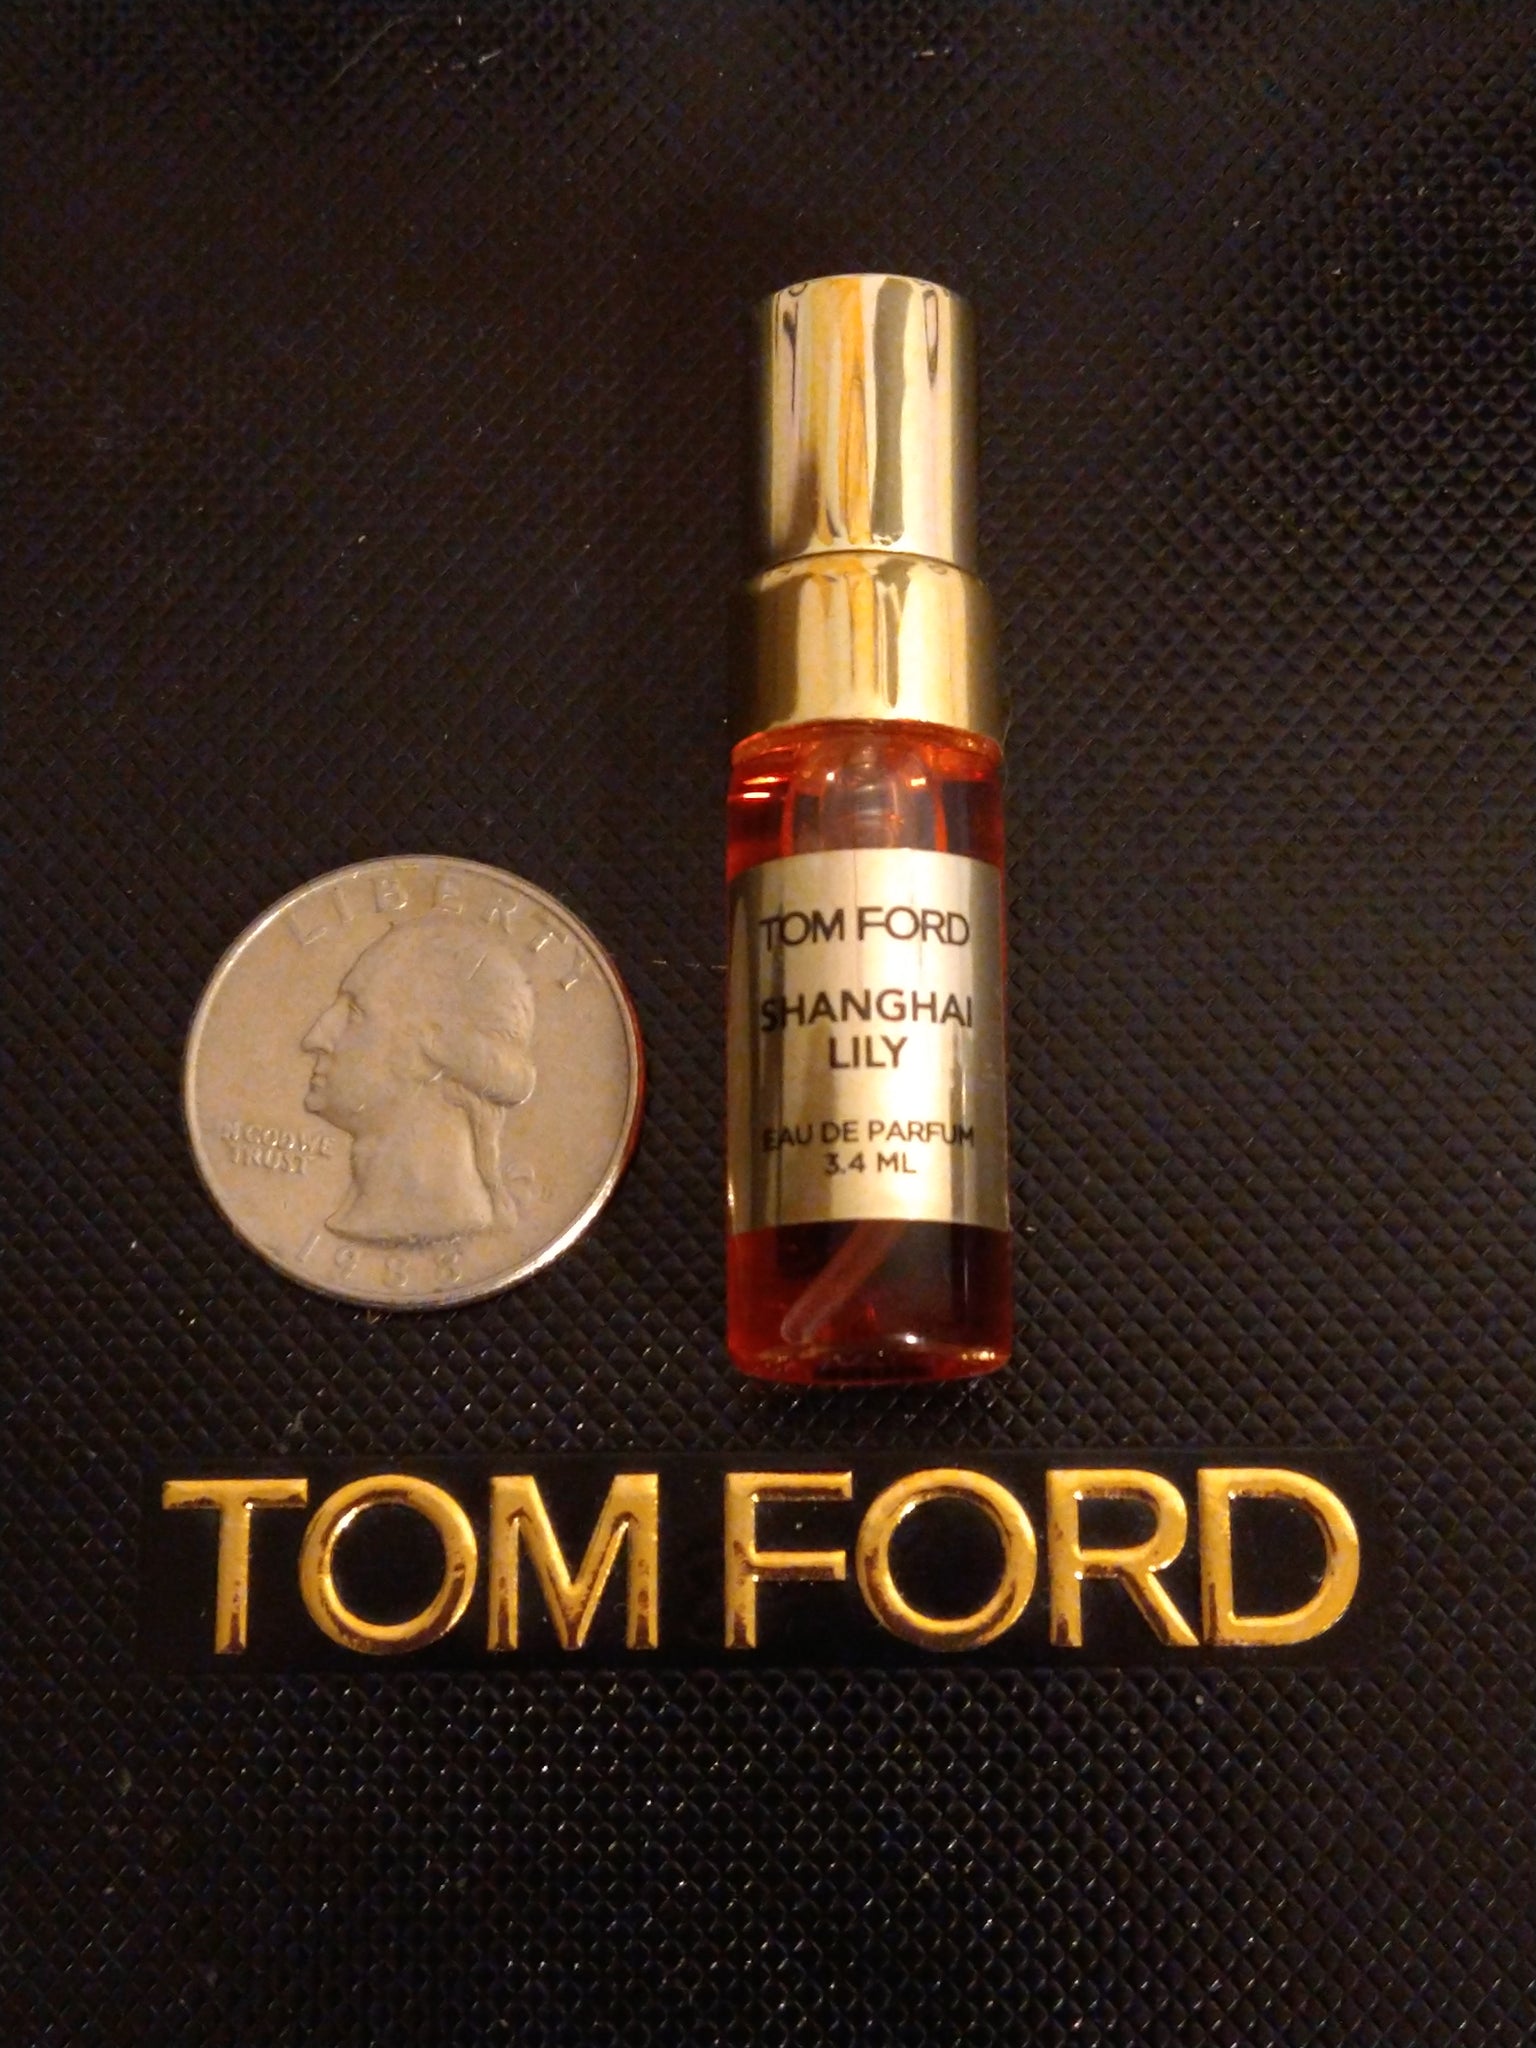 Shanghai Lily Authentic Tom Ford Perfume Samples – TomFordPerfumeSamples